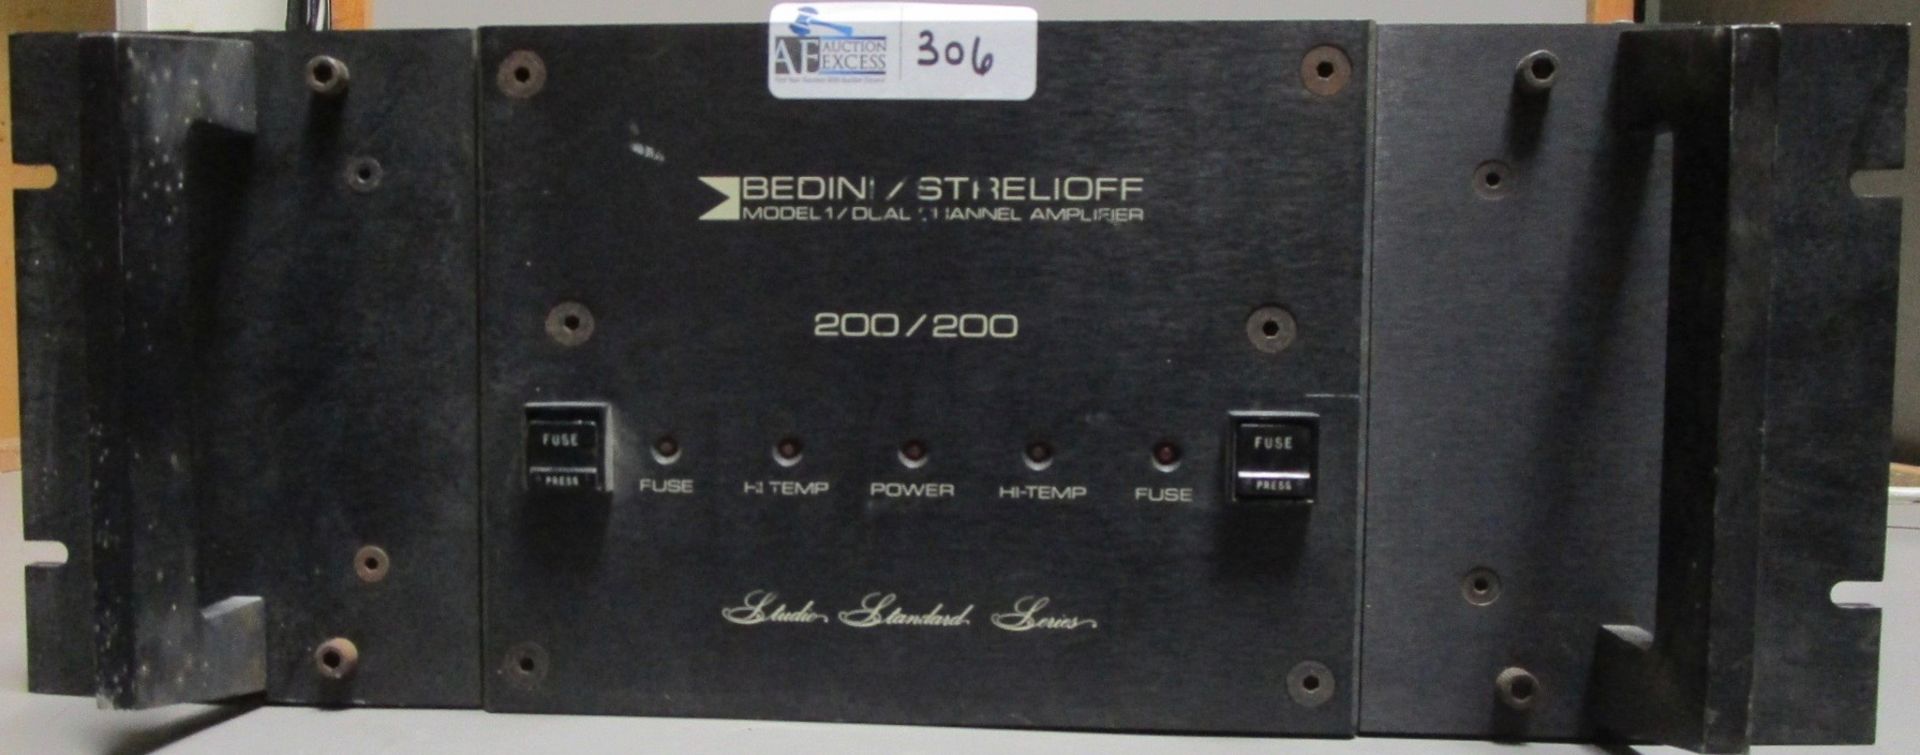 BEDIN/STRELIOFF 1 AMP